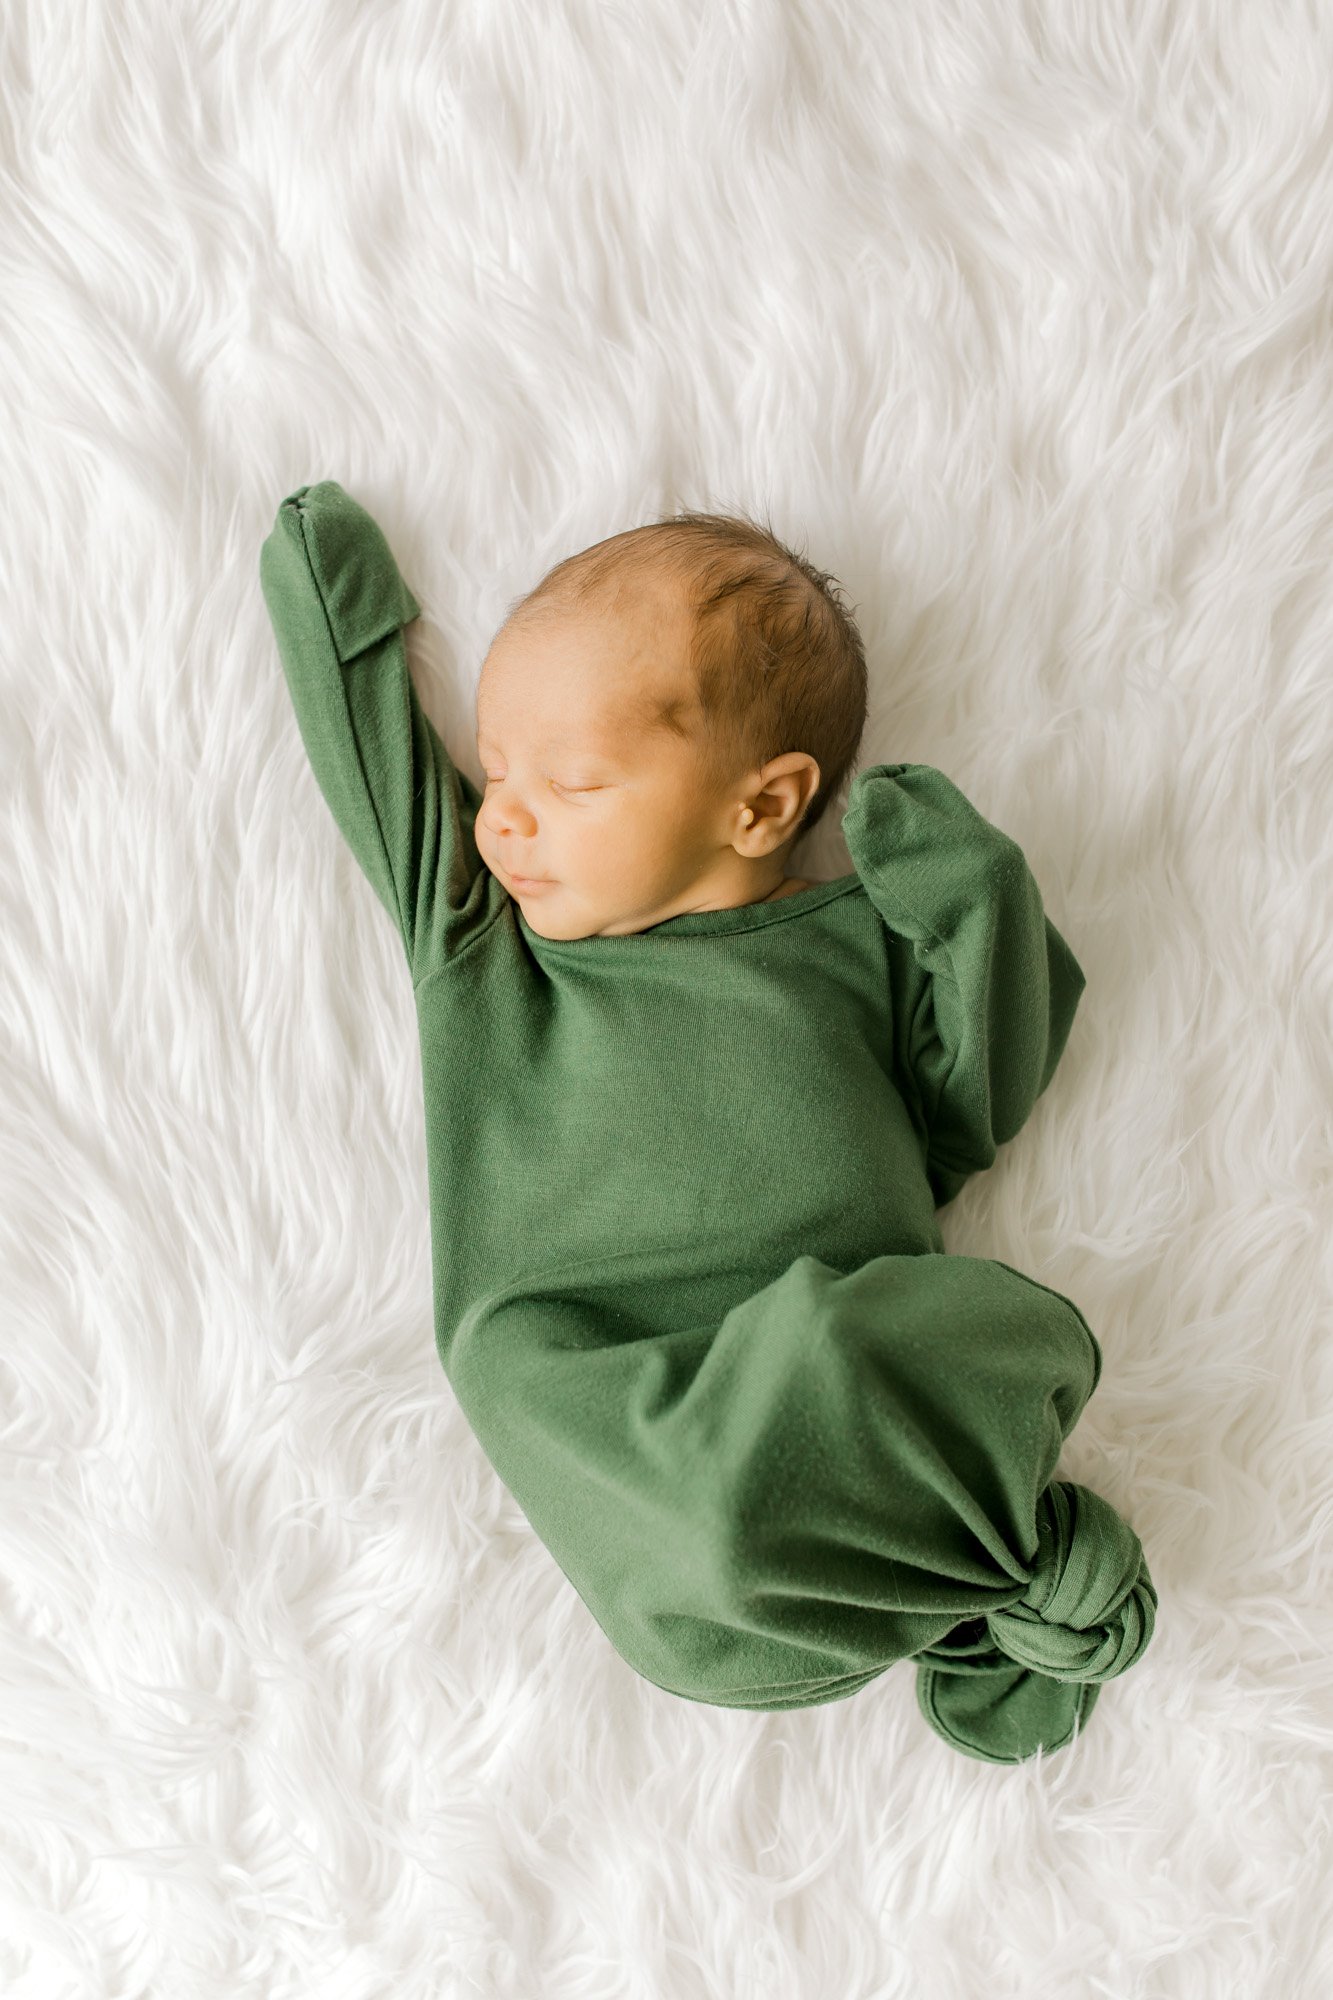 Newborn Lifestyle Photography | West Michigan Newborn Photography | Timeless Newborn Photos in Michigan